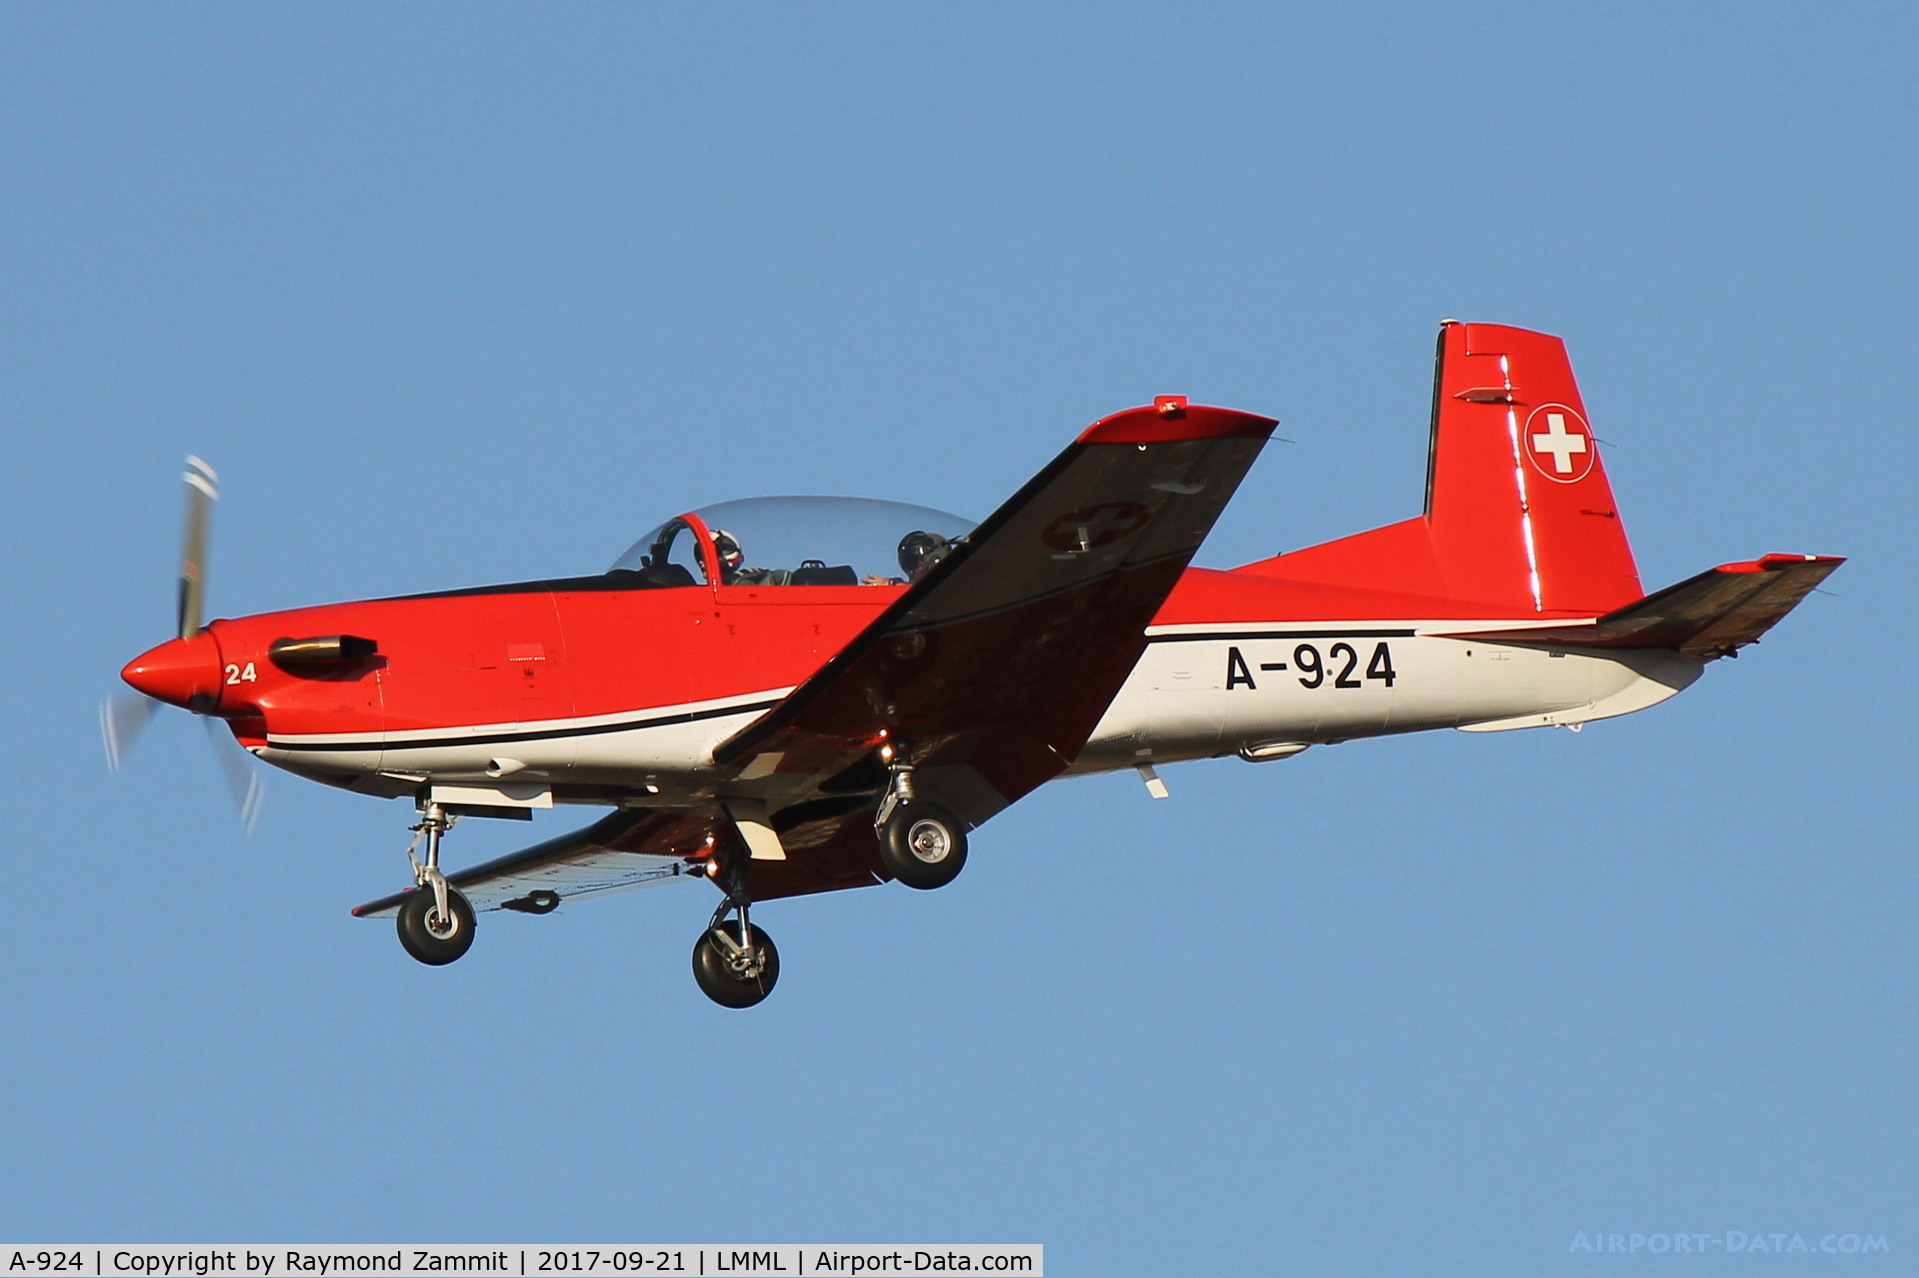 A-924, 1983 Pilatus PC-7 Turbo Trainer C/N 332, Pilatus PC-7 A-924 Swiss Air Force